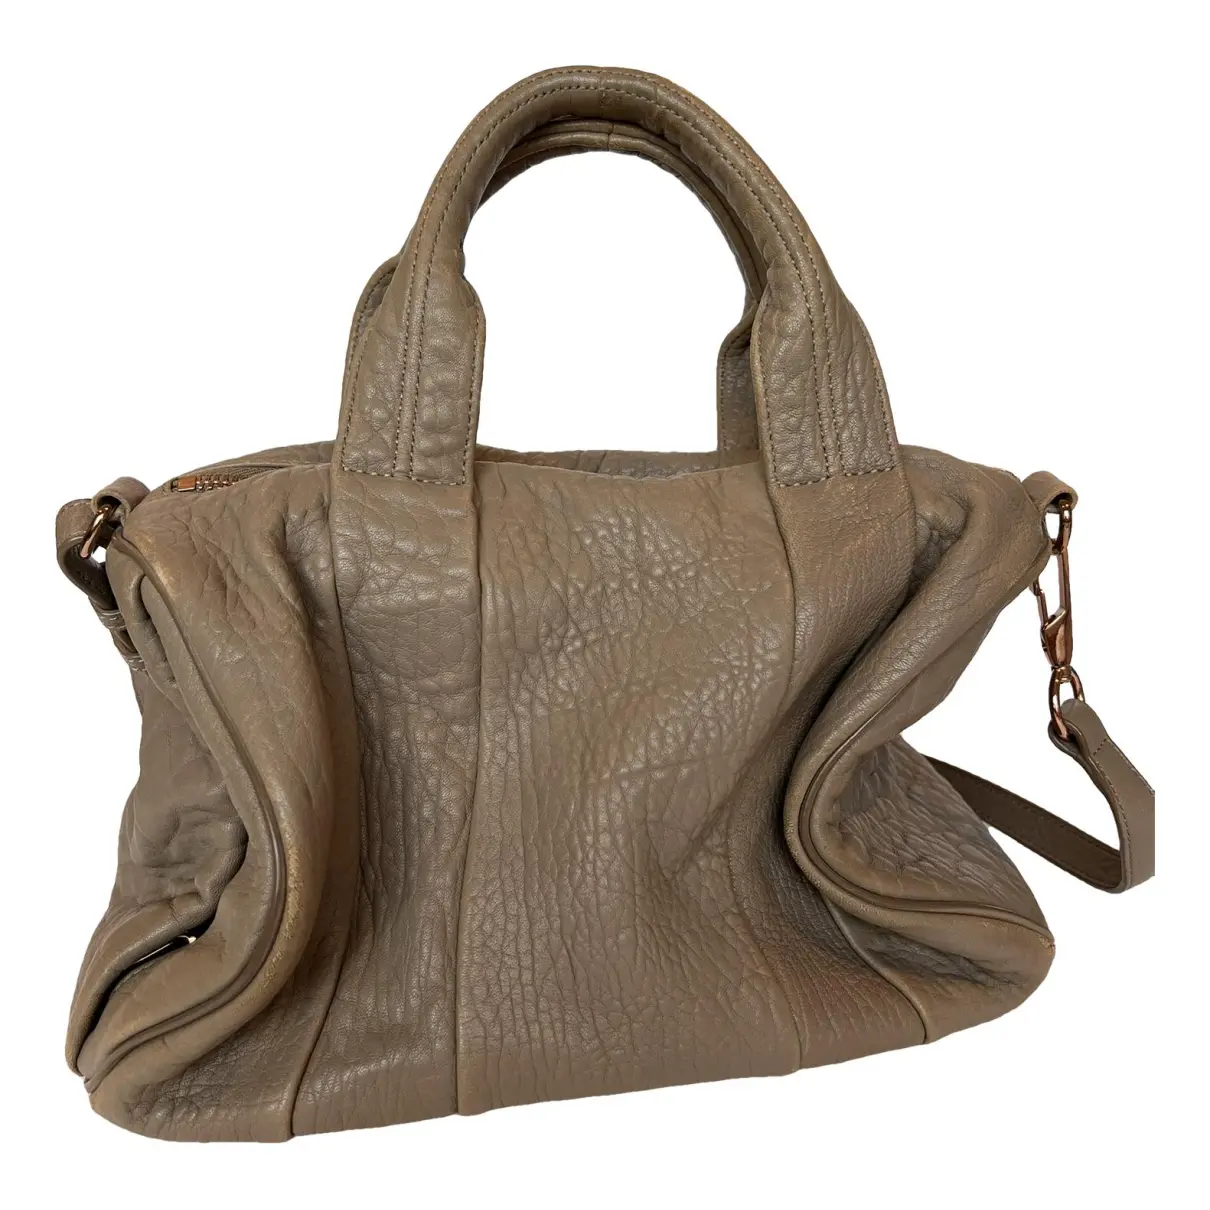 Rocco leather handbag